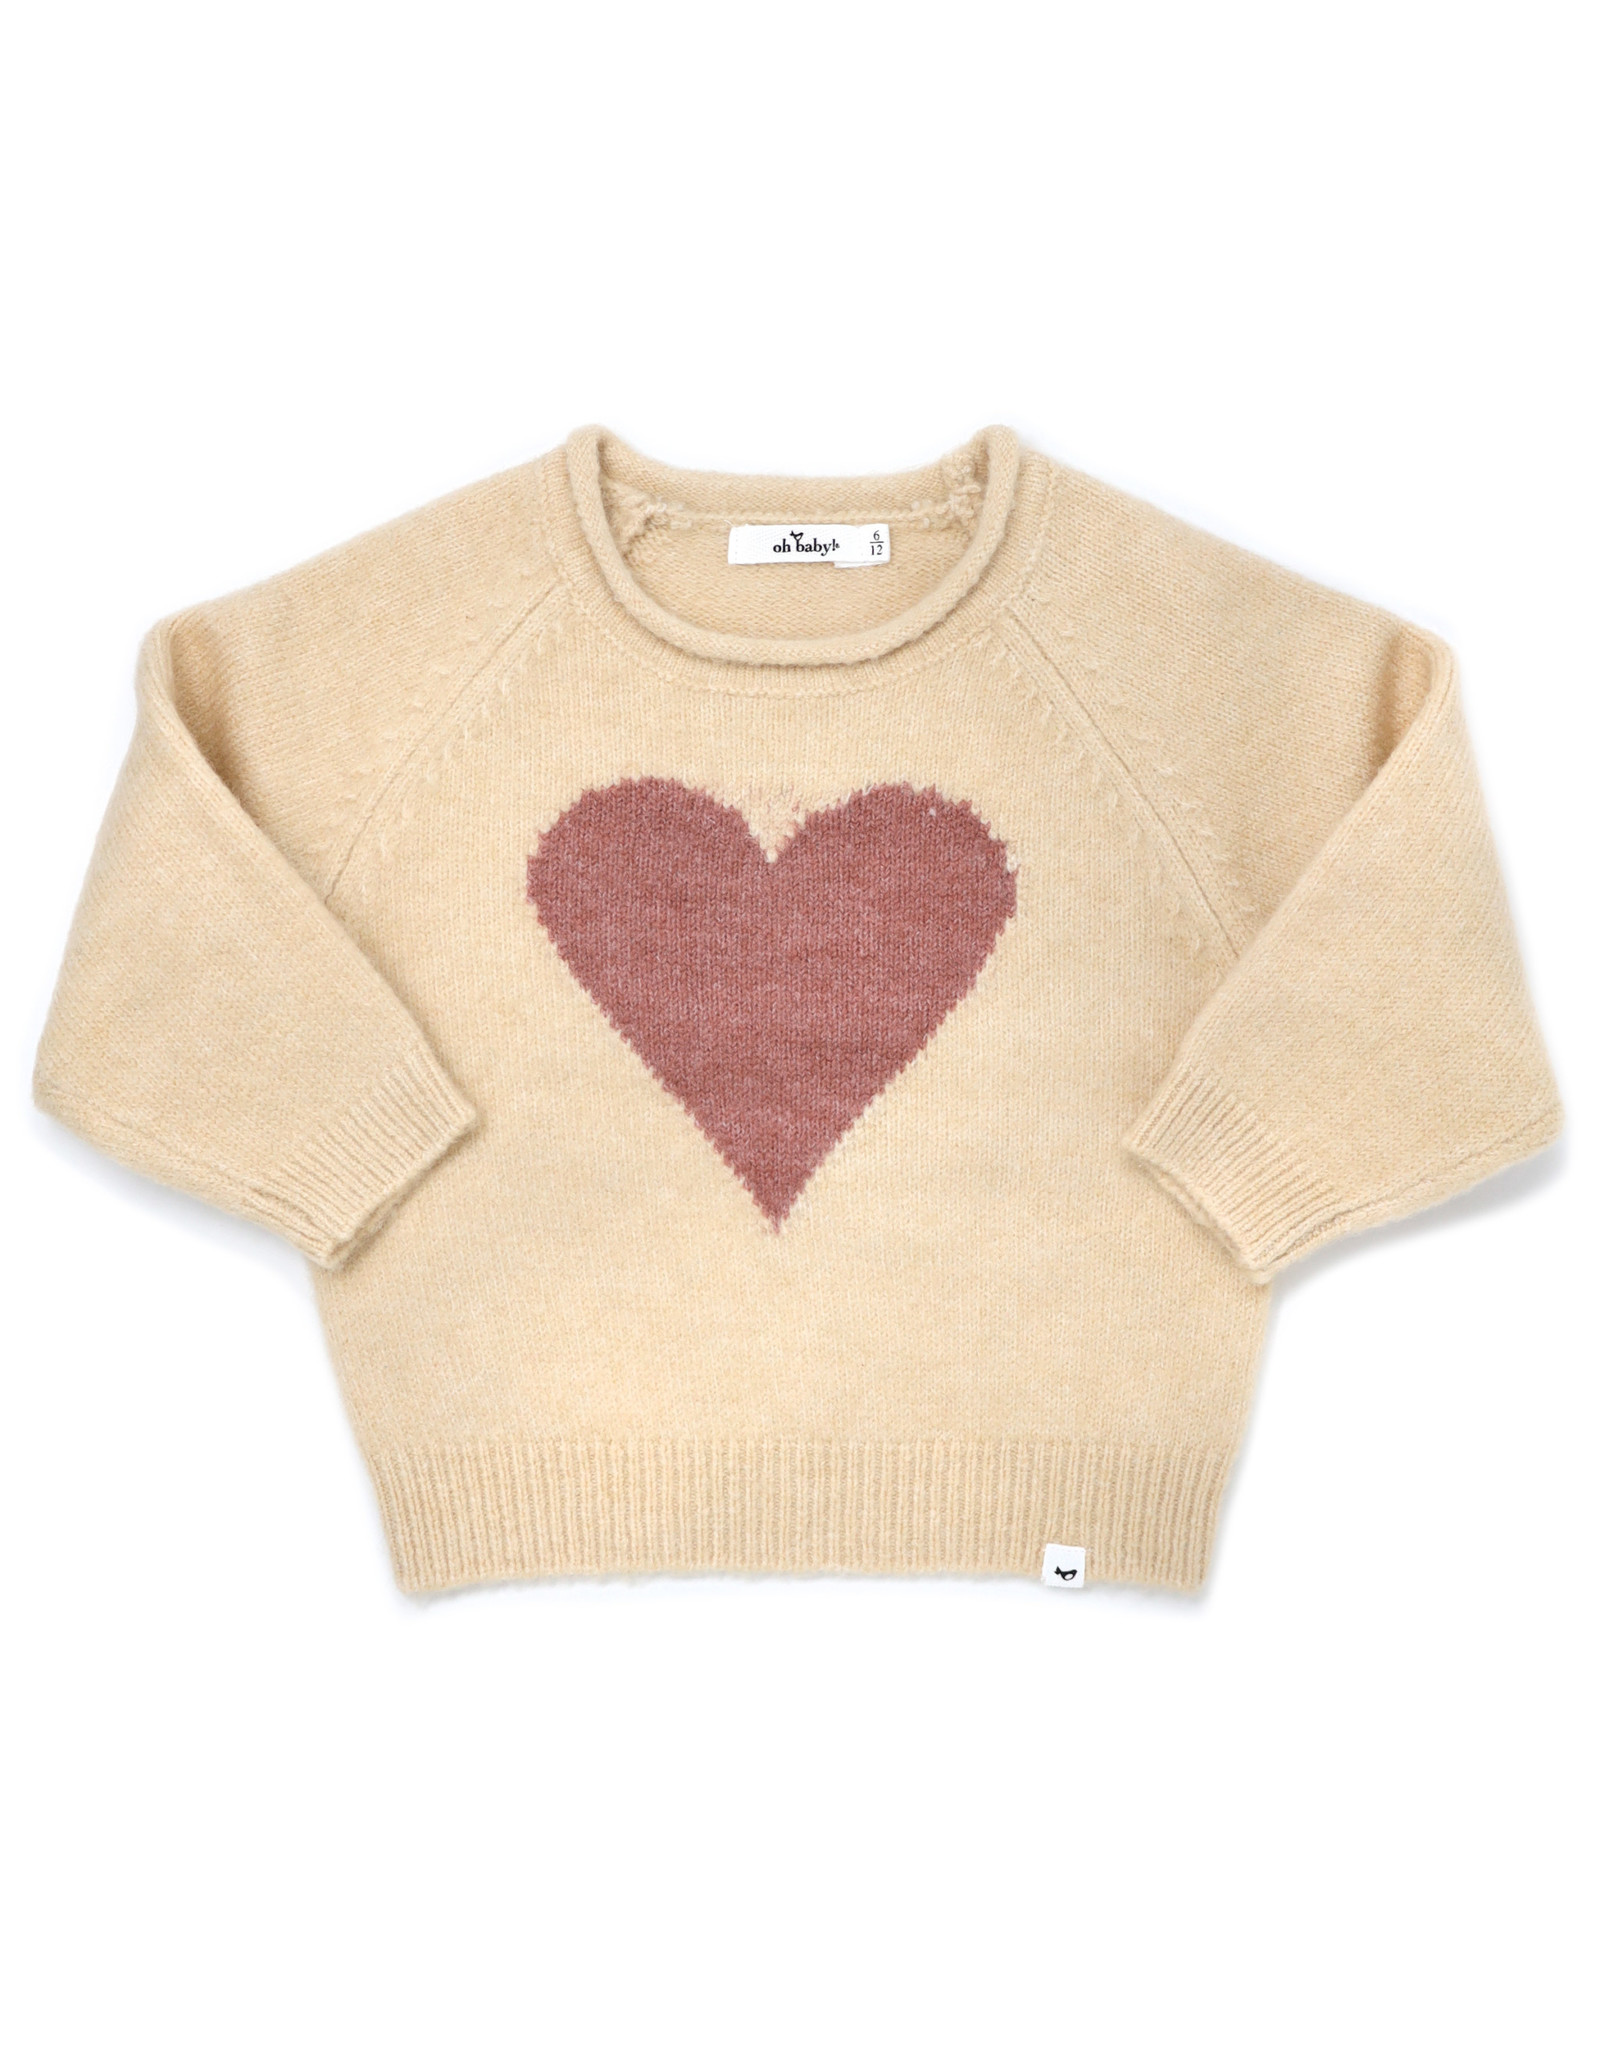 OB Girls Fuzzy Heart Knit Sweater